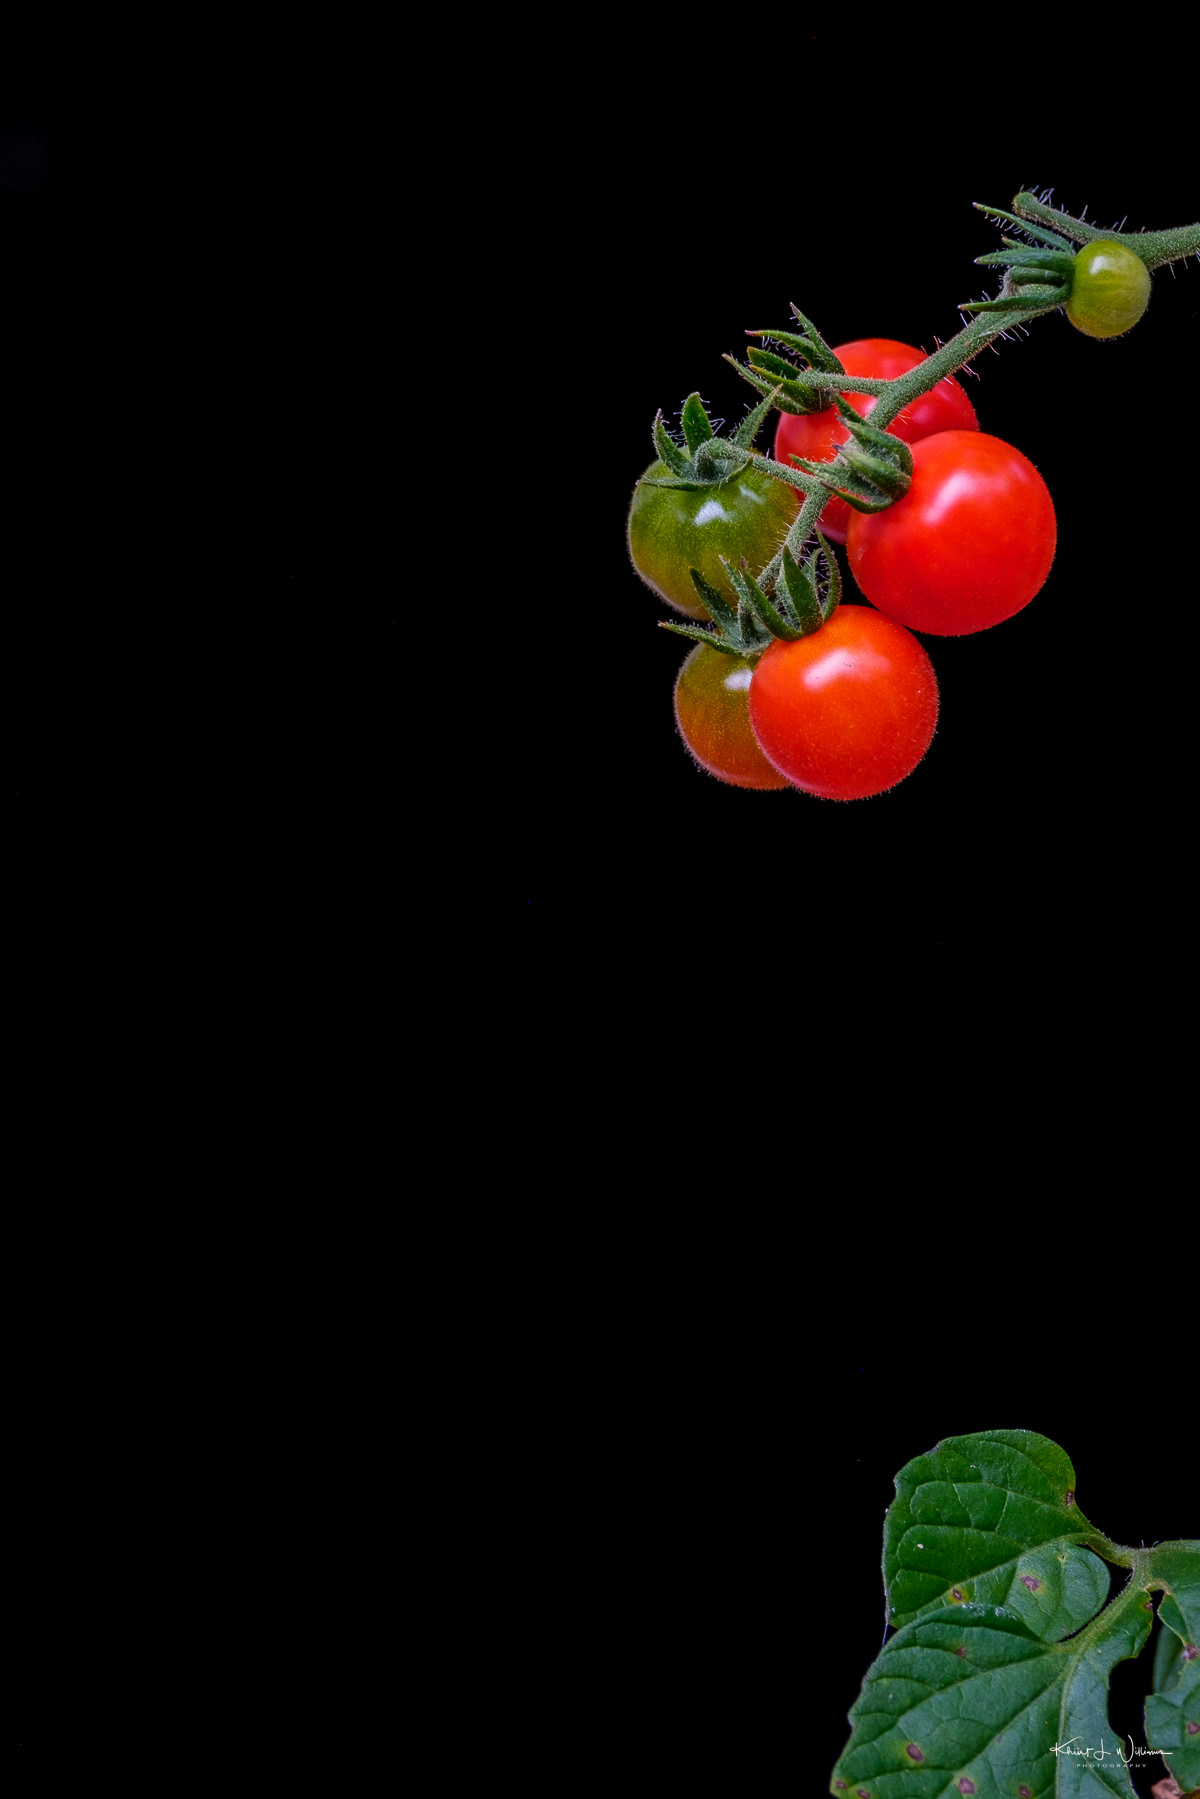 Do Tomatoes Self Seed?